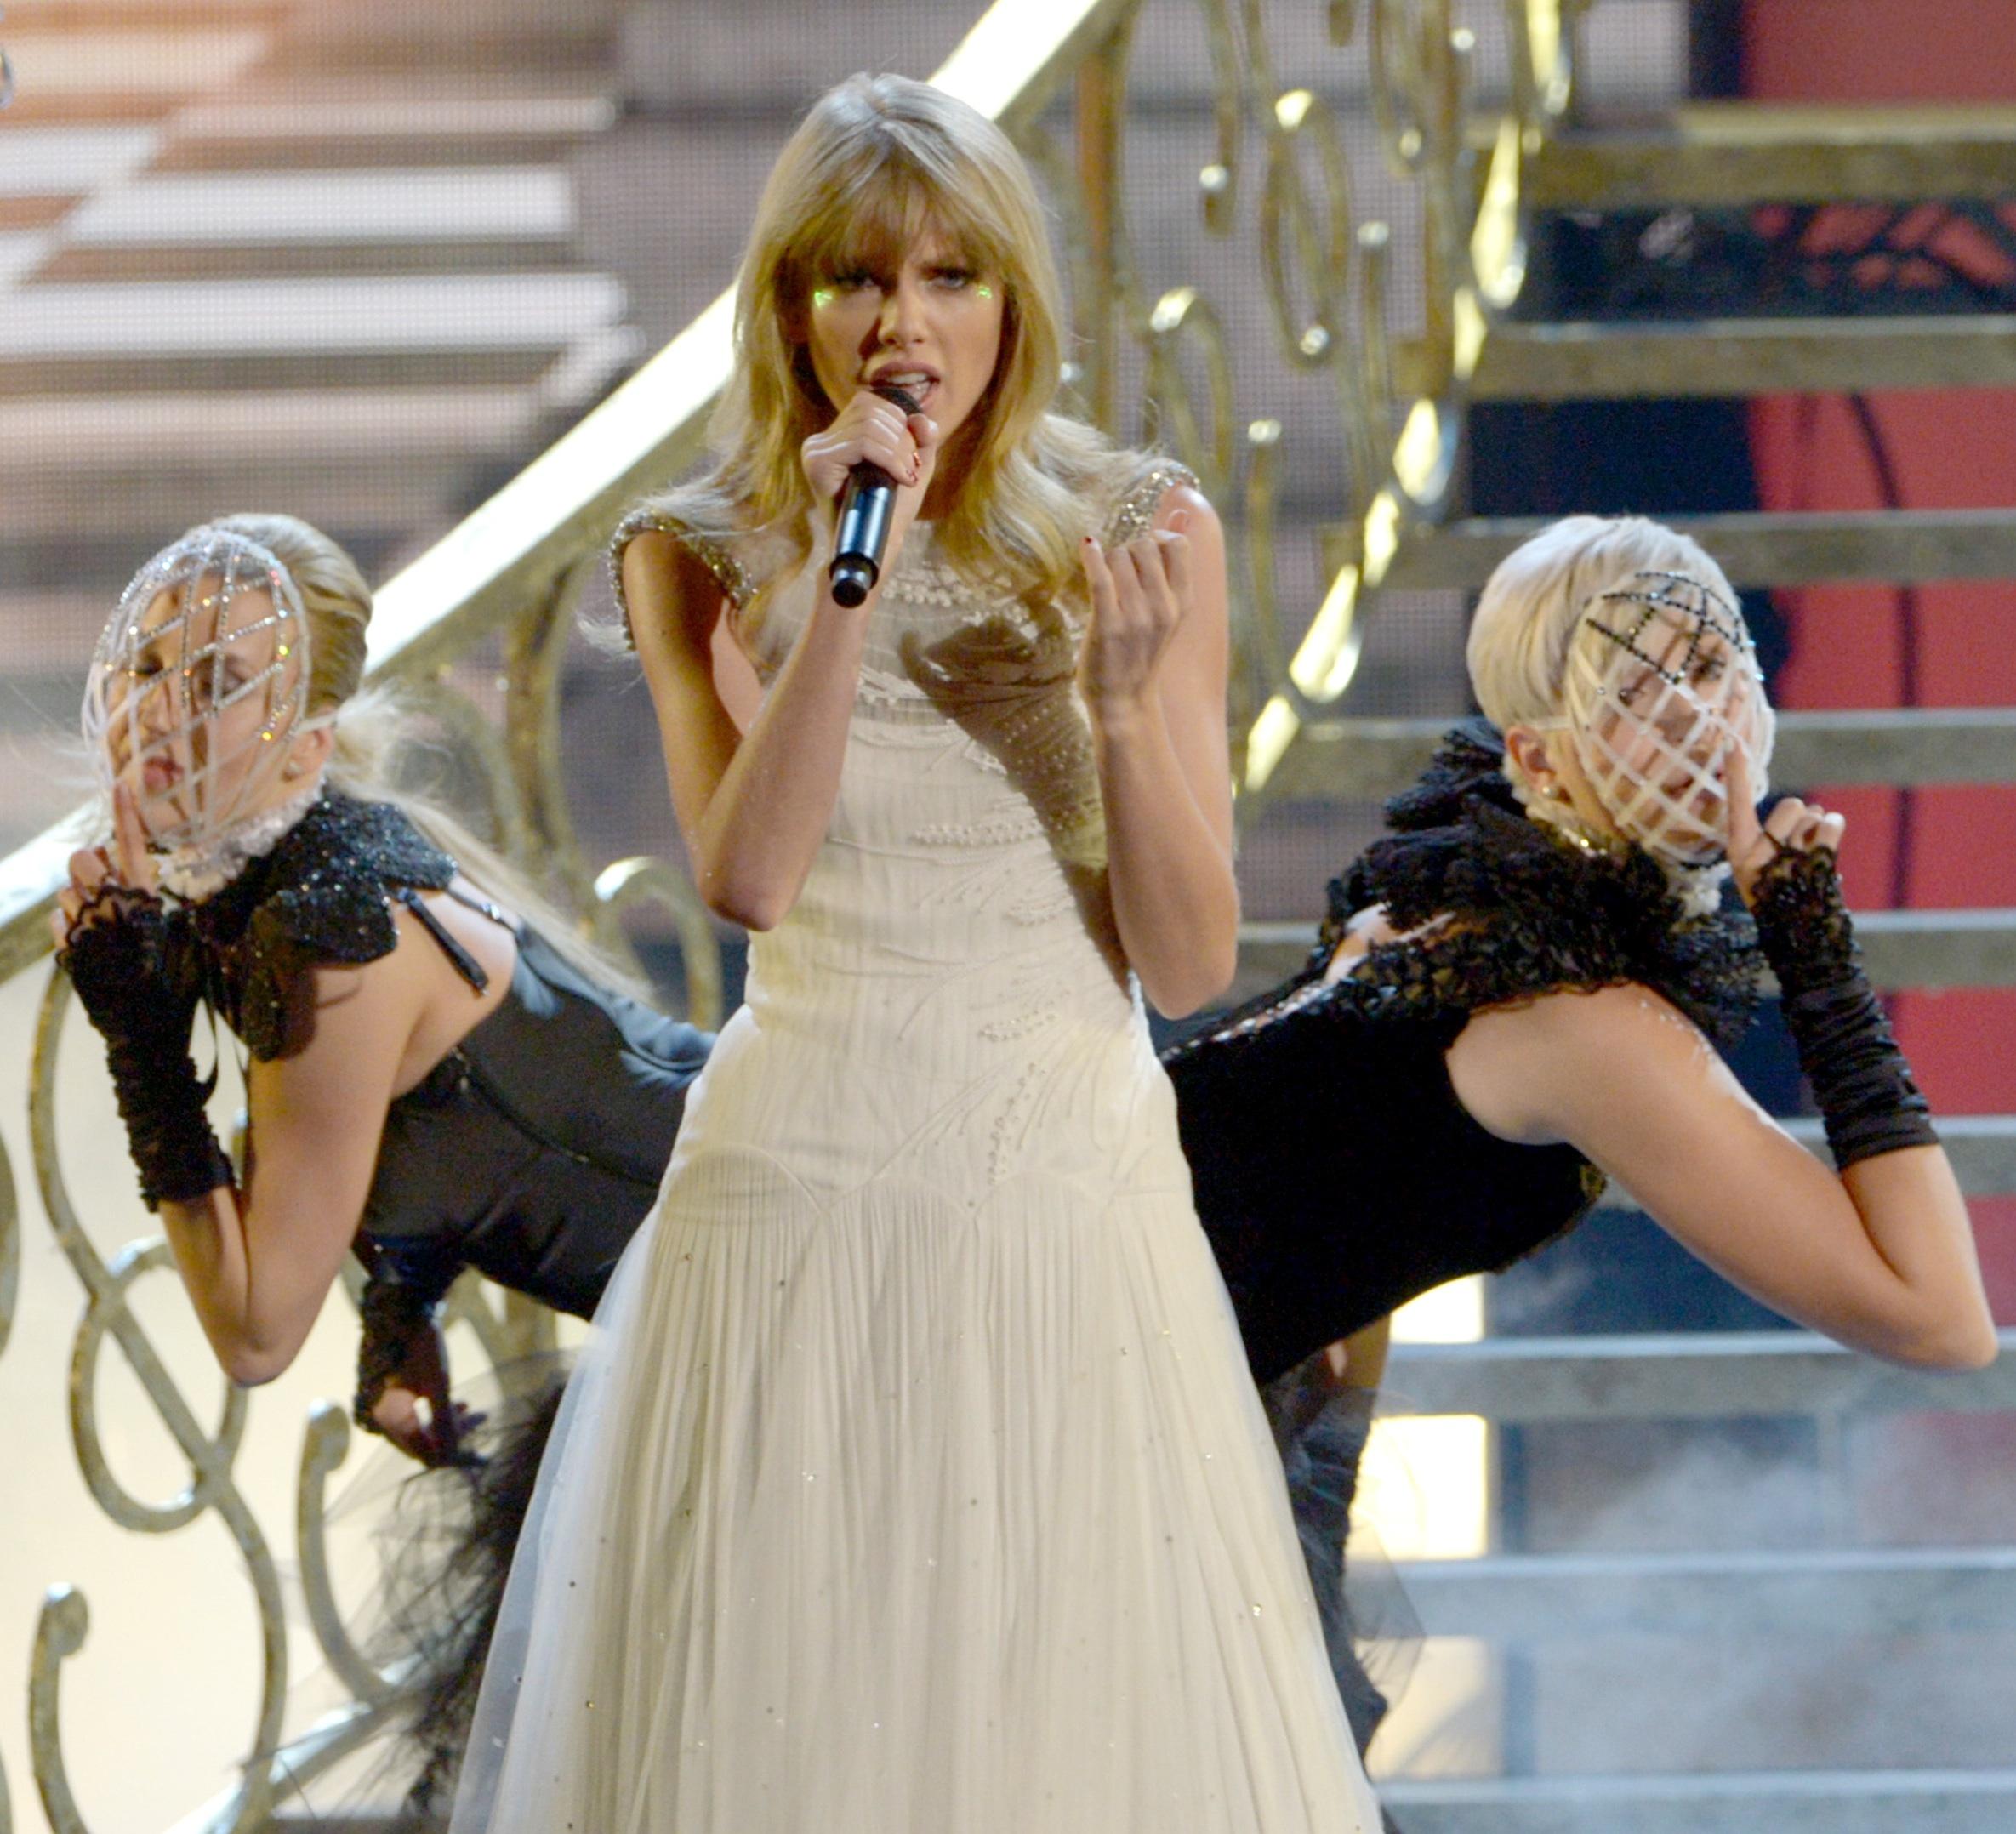 I Knew You Were Trouble Taylor Swift | Sticker